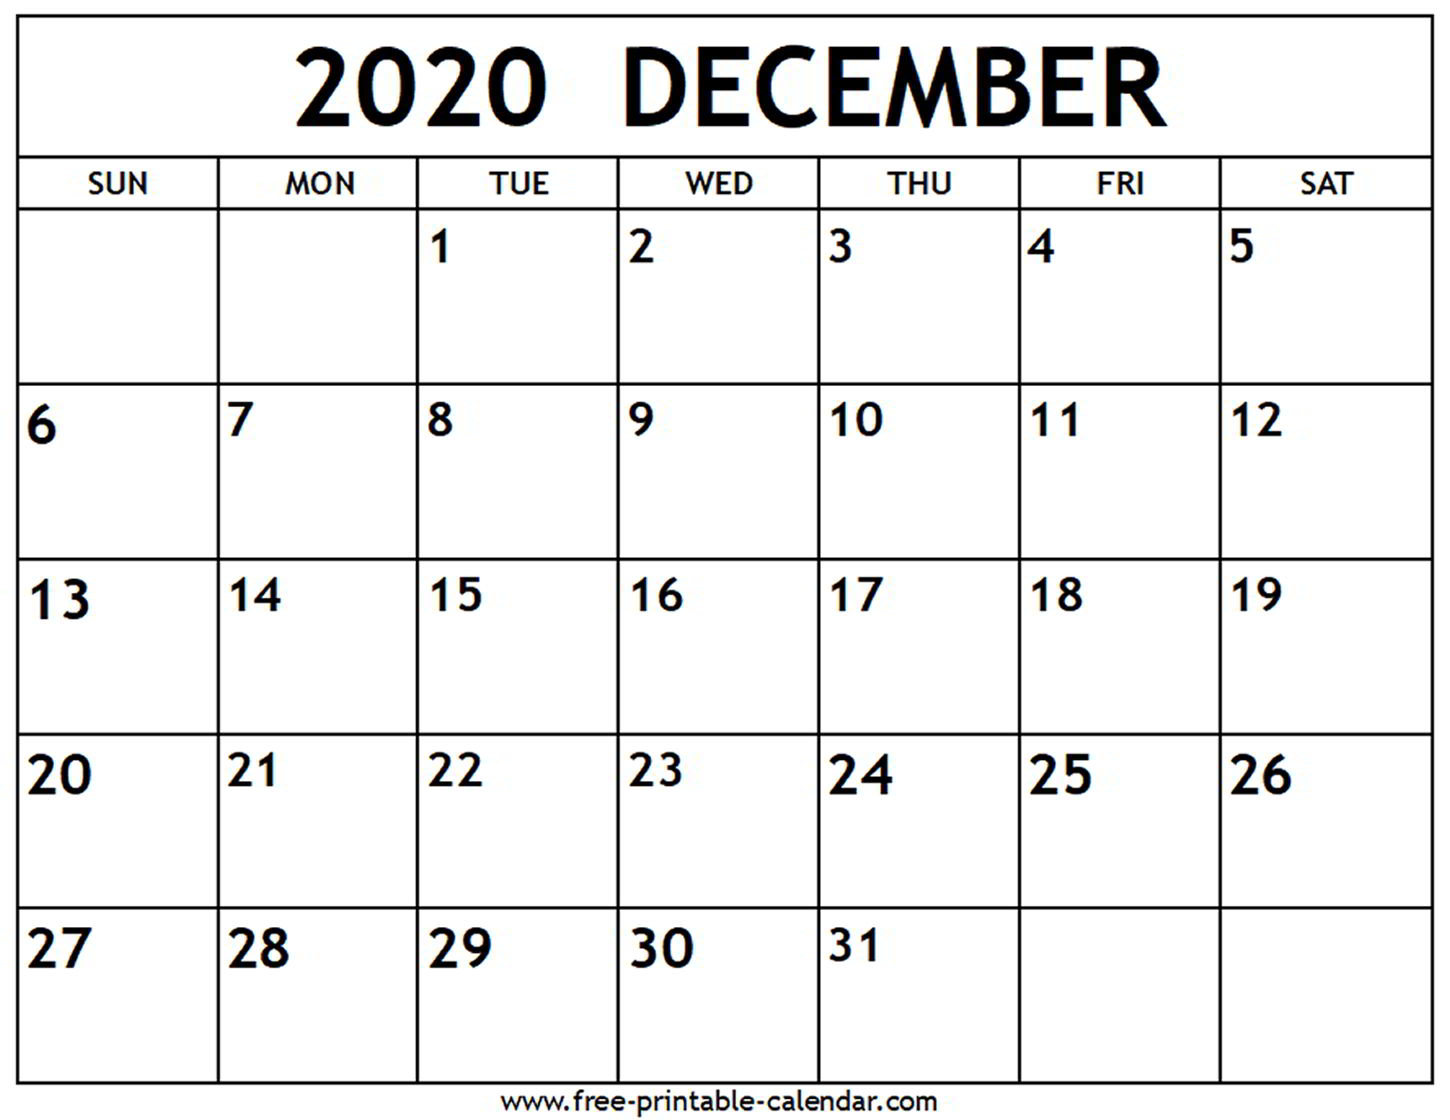 December 2020 Calendar - Free-Printable-Calendar